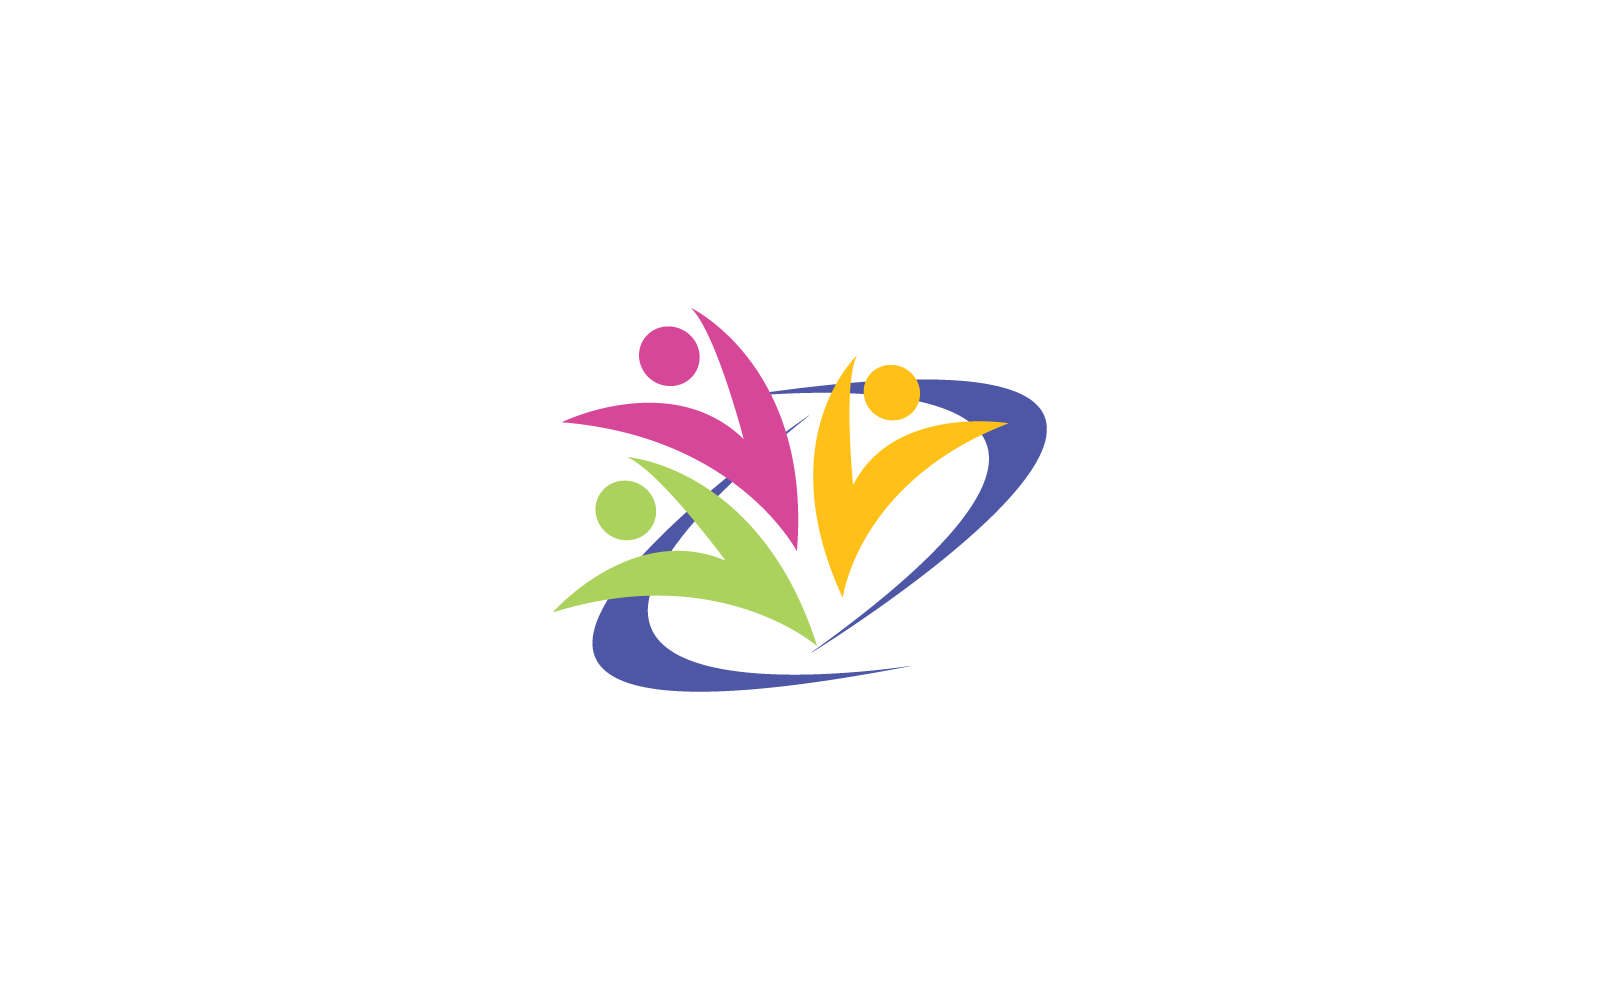 Community Care design illustration logo template